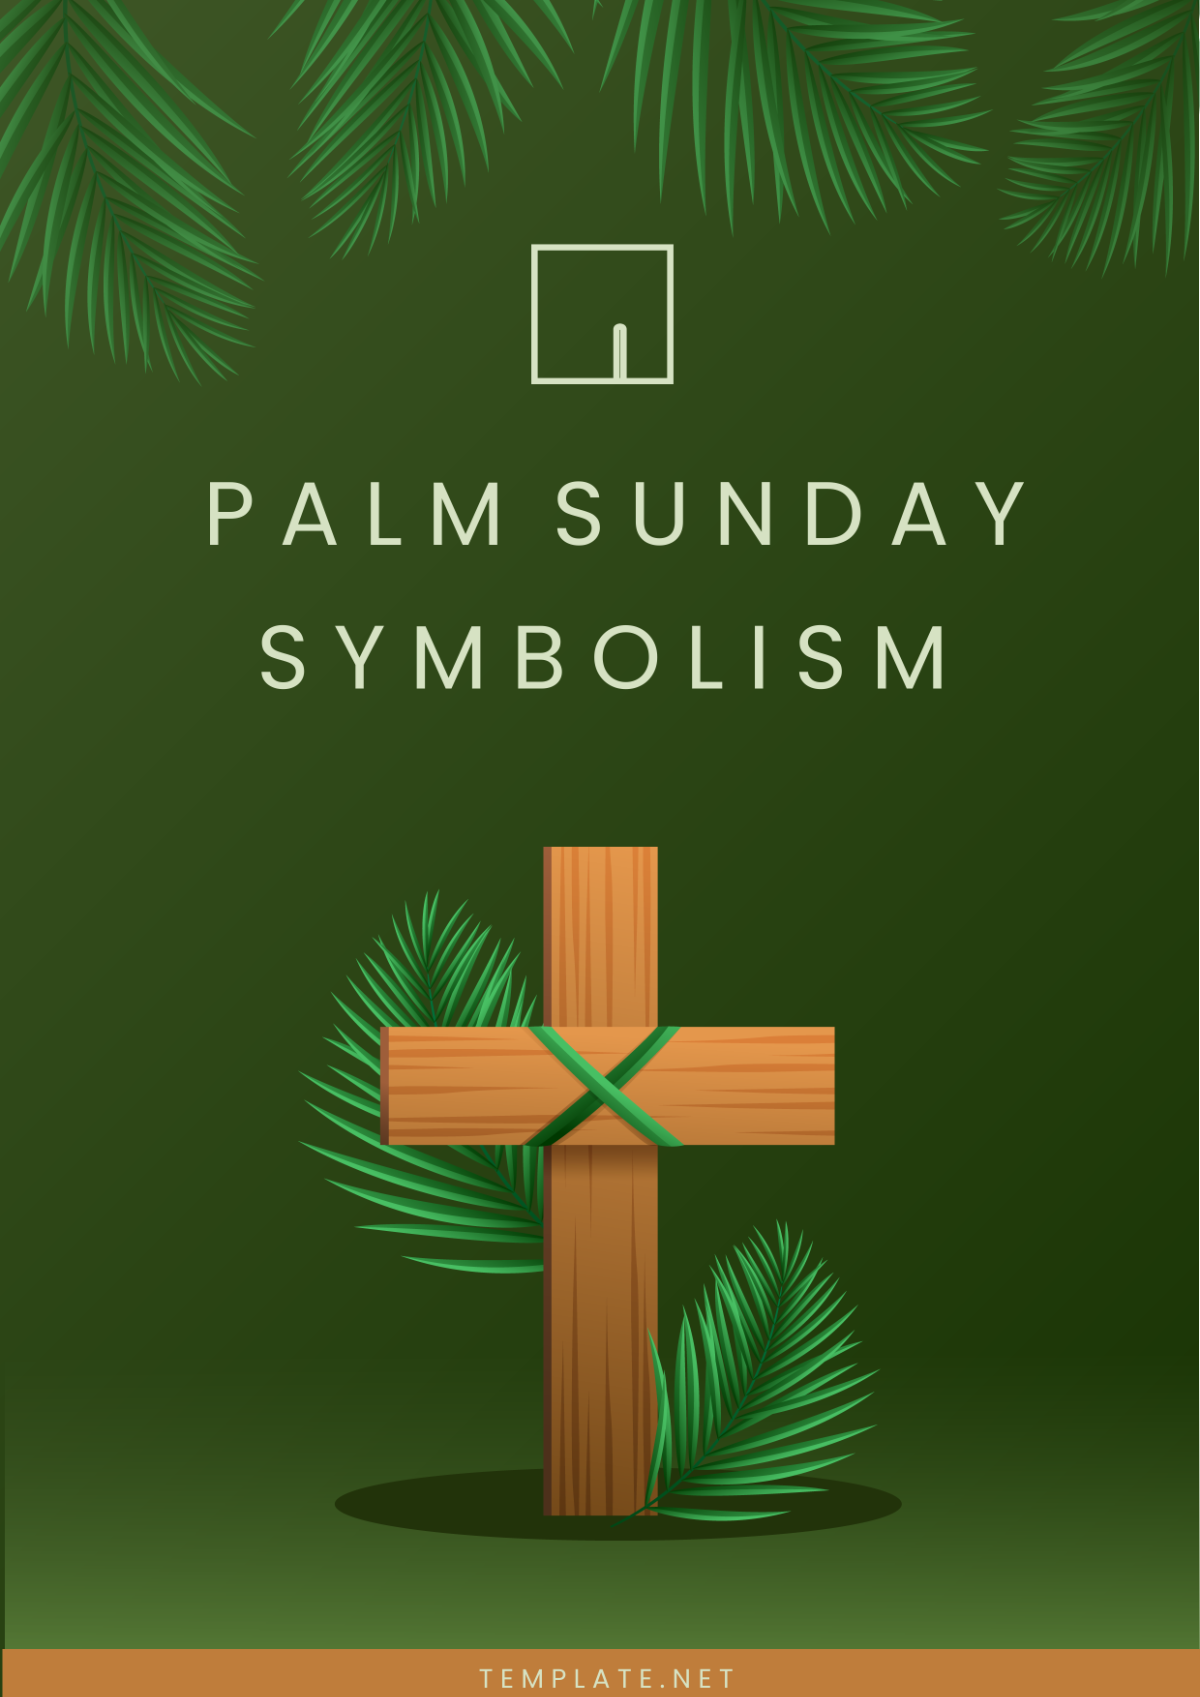 Palm Sunday Symbolism Cover Page